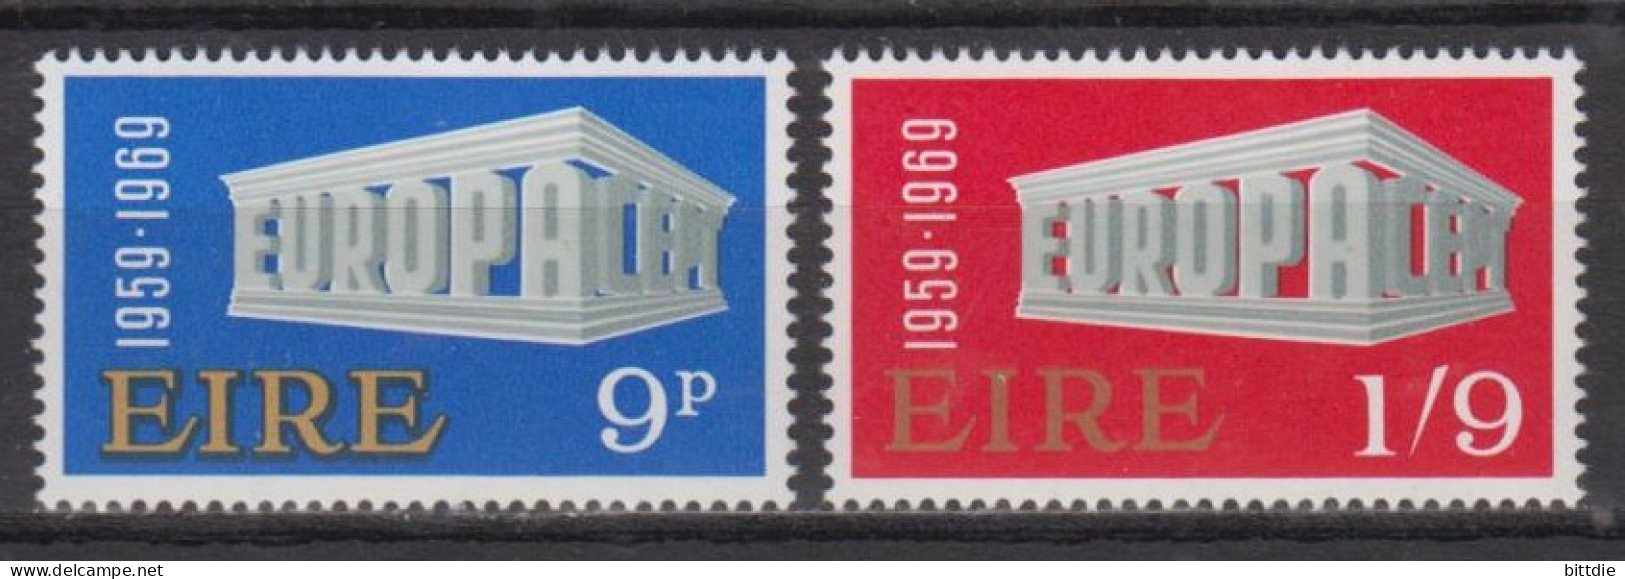 Europa/Cept , Irland  230/31 , Xx  (S 1746) - 1969